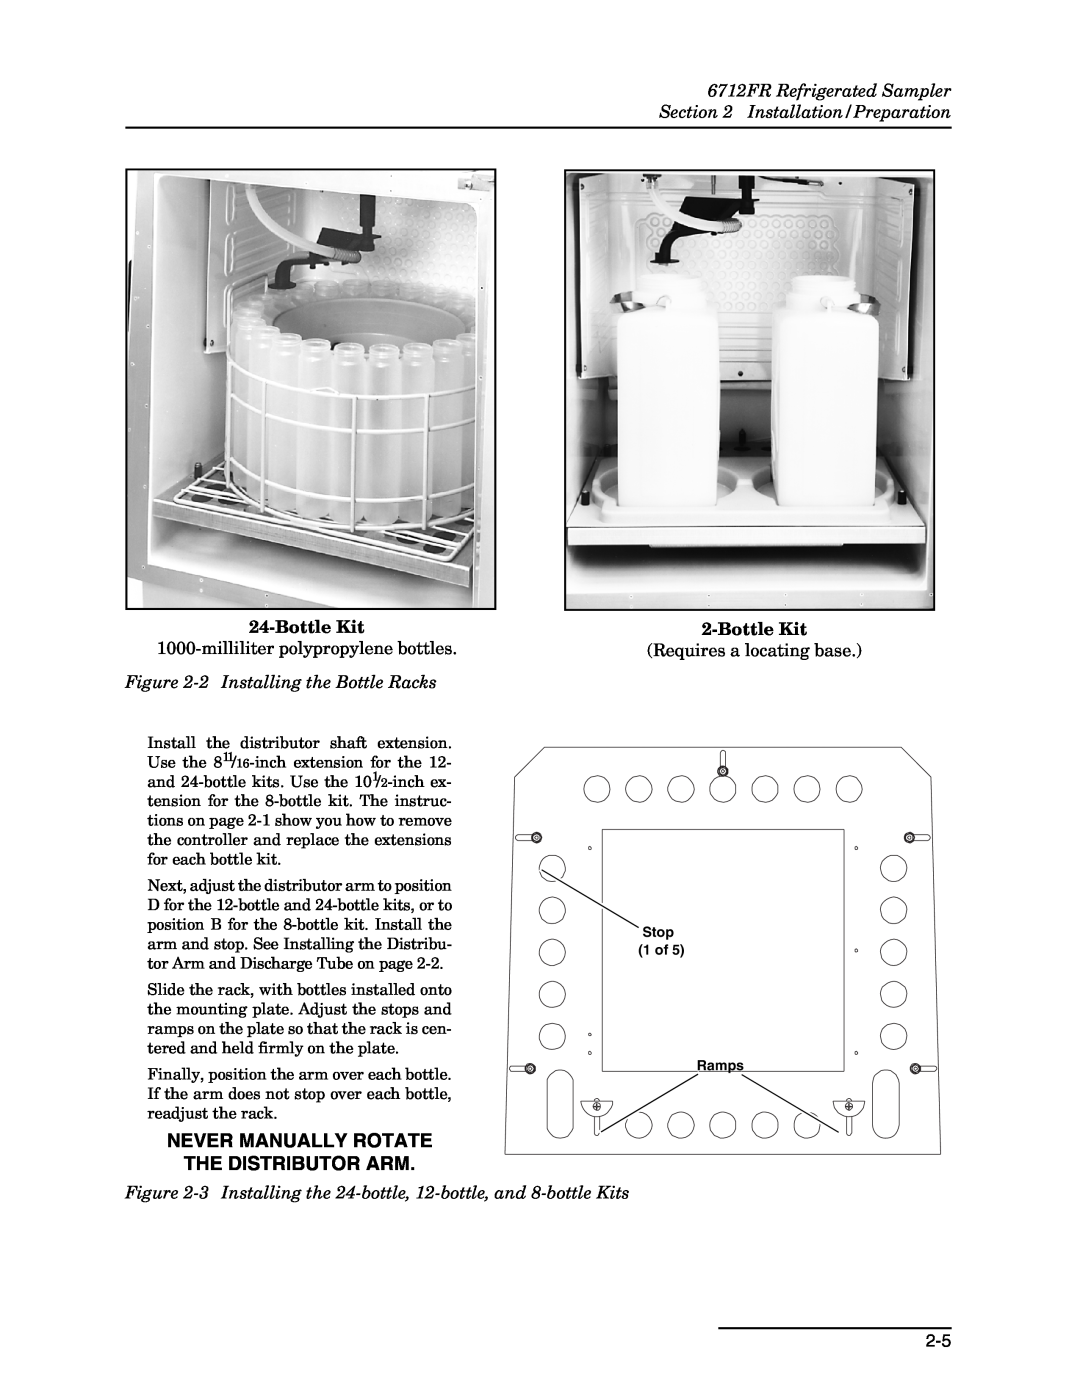 Teledyne manual 6712FR Refrigerated Sampler Installation/Preparation, Bottle Kit, 2 Installing the Bottle Racks 